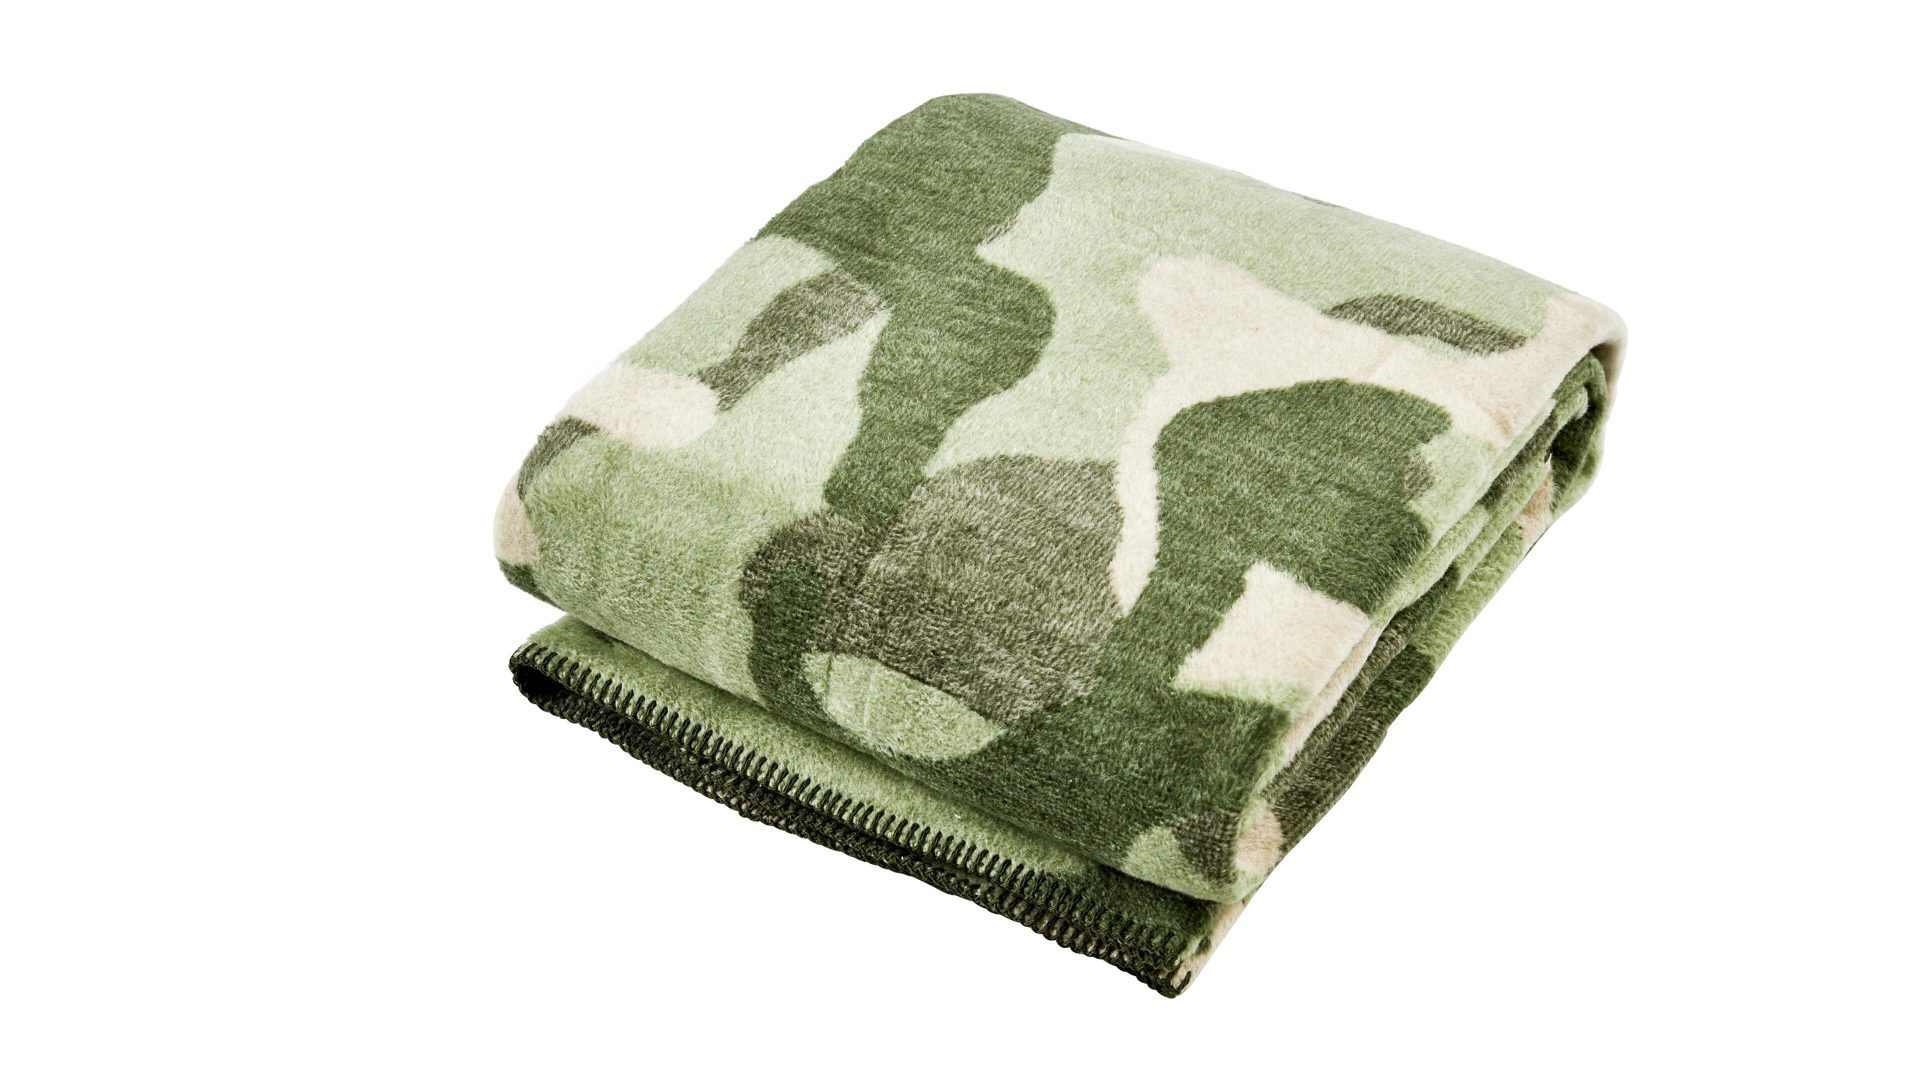 Wohndecke Done® by karabel home company aus Stoff in Grün Done Wohndecke Blanket Camouflage khakifarbenes Camouflagemuster – ca. 150 x 200 cm